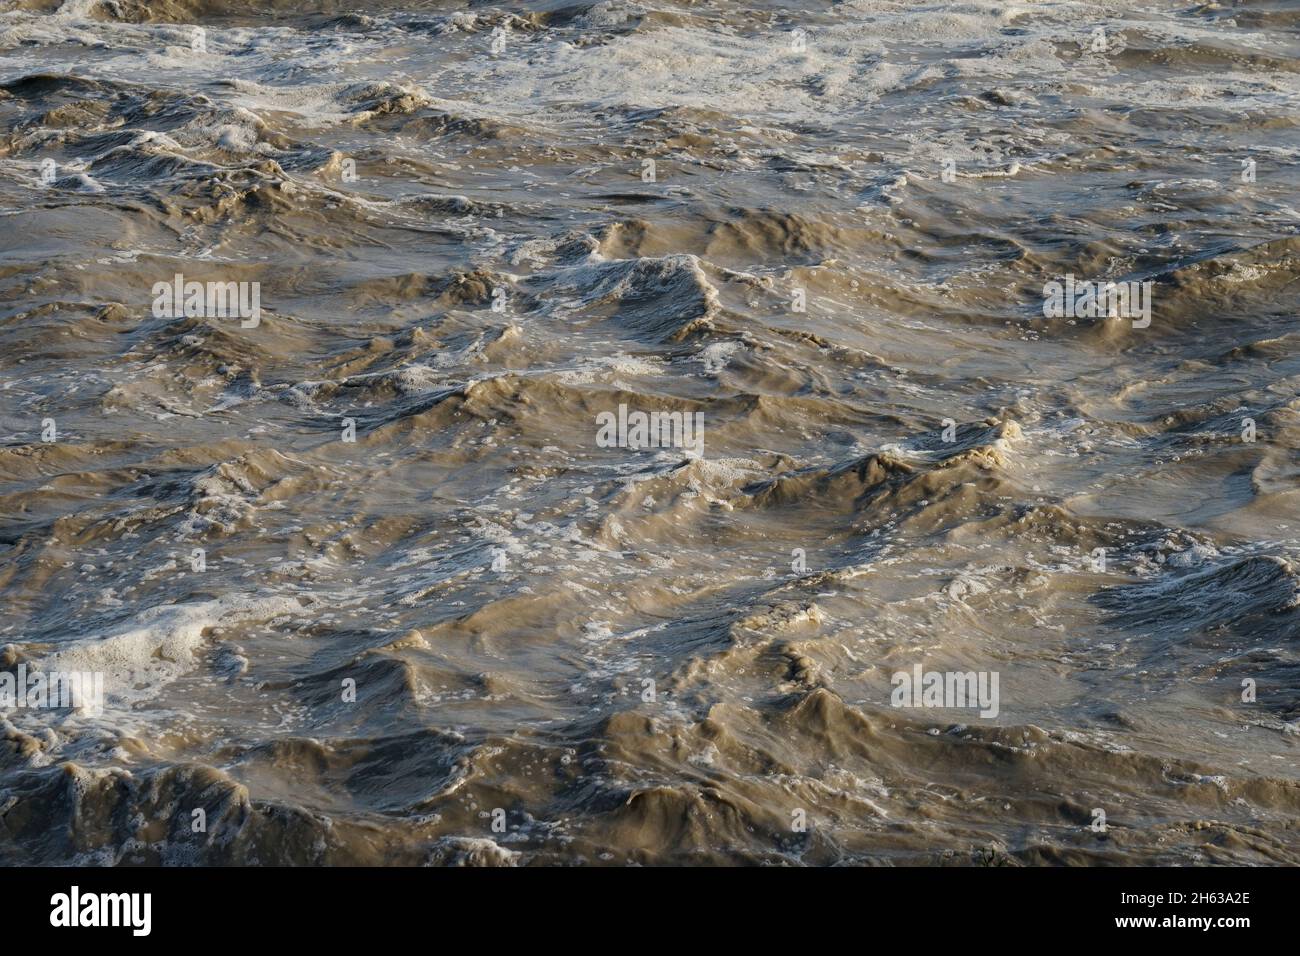 germany,bavaria,upper bavaria,neuötting,inn,dirty flood water,fast flowing,raging Stock Photo